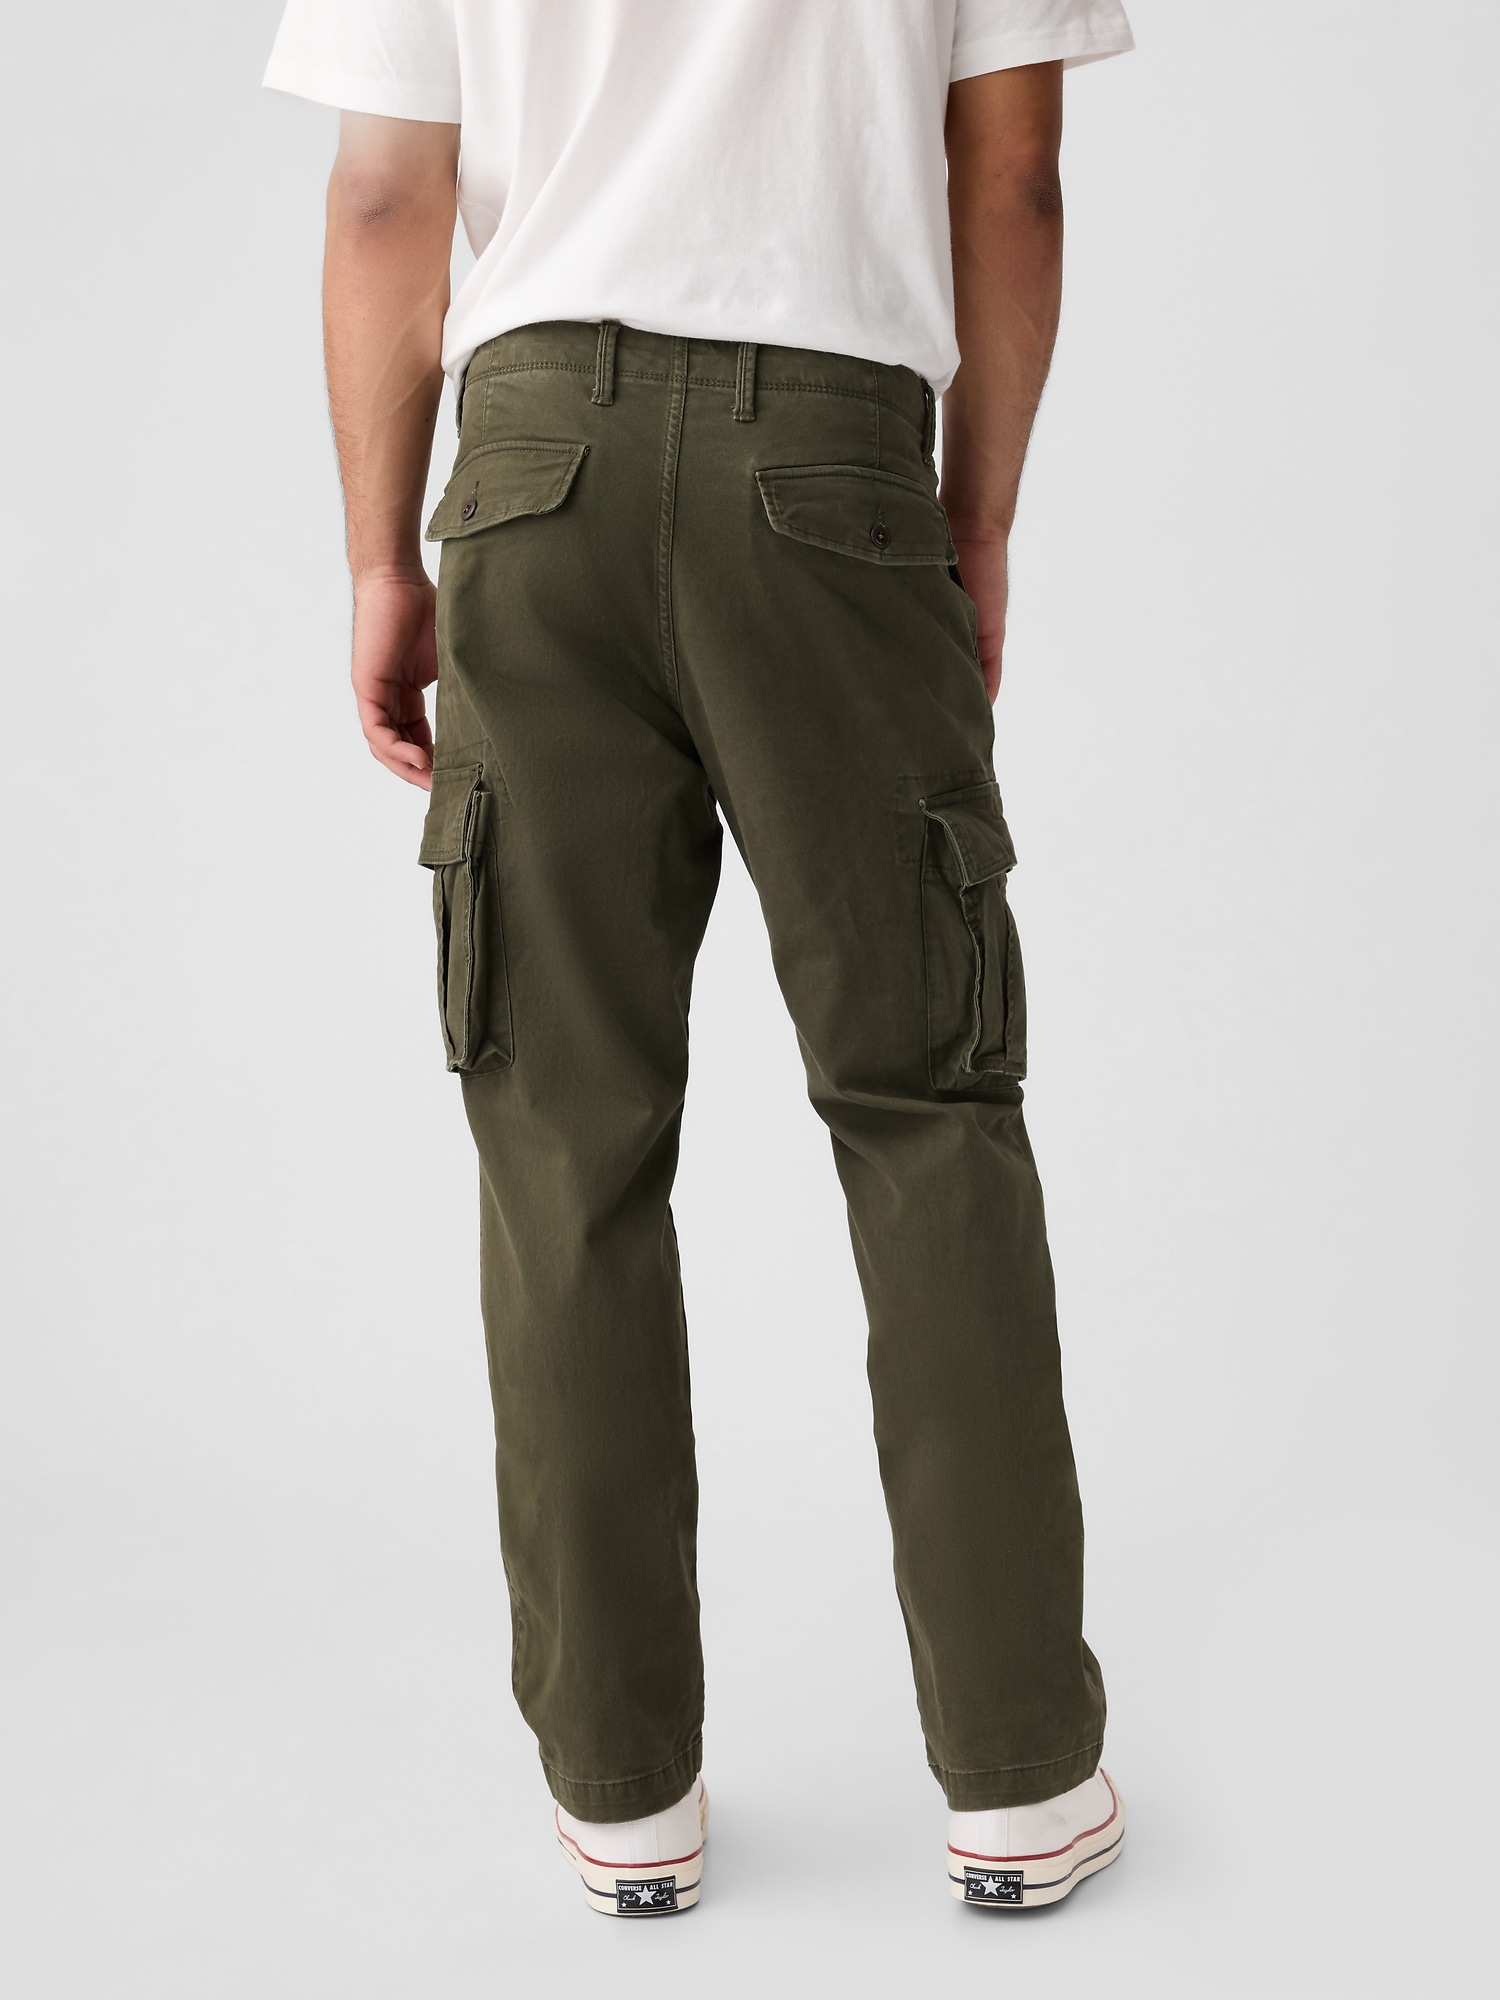 Cargo Pants with GapFlex | Gap